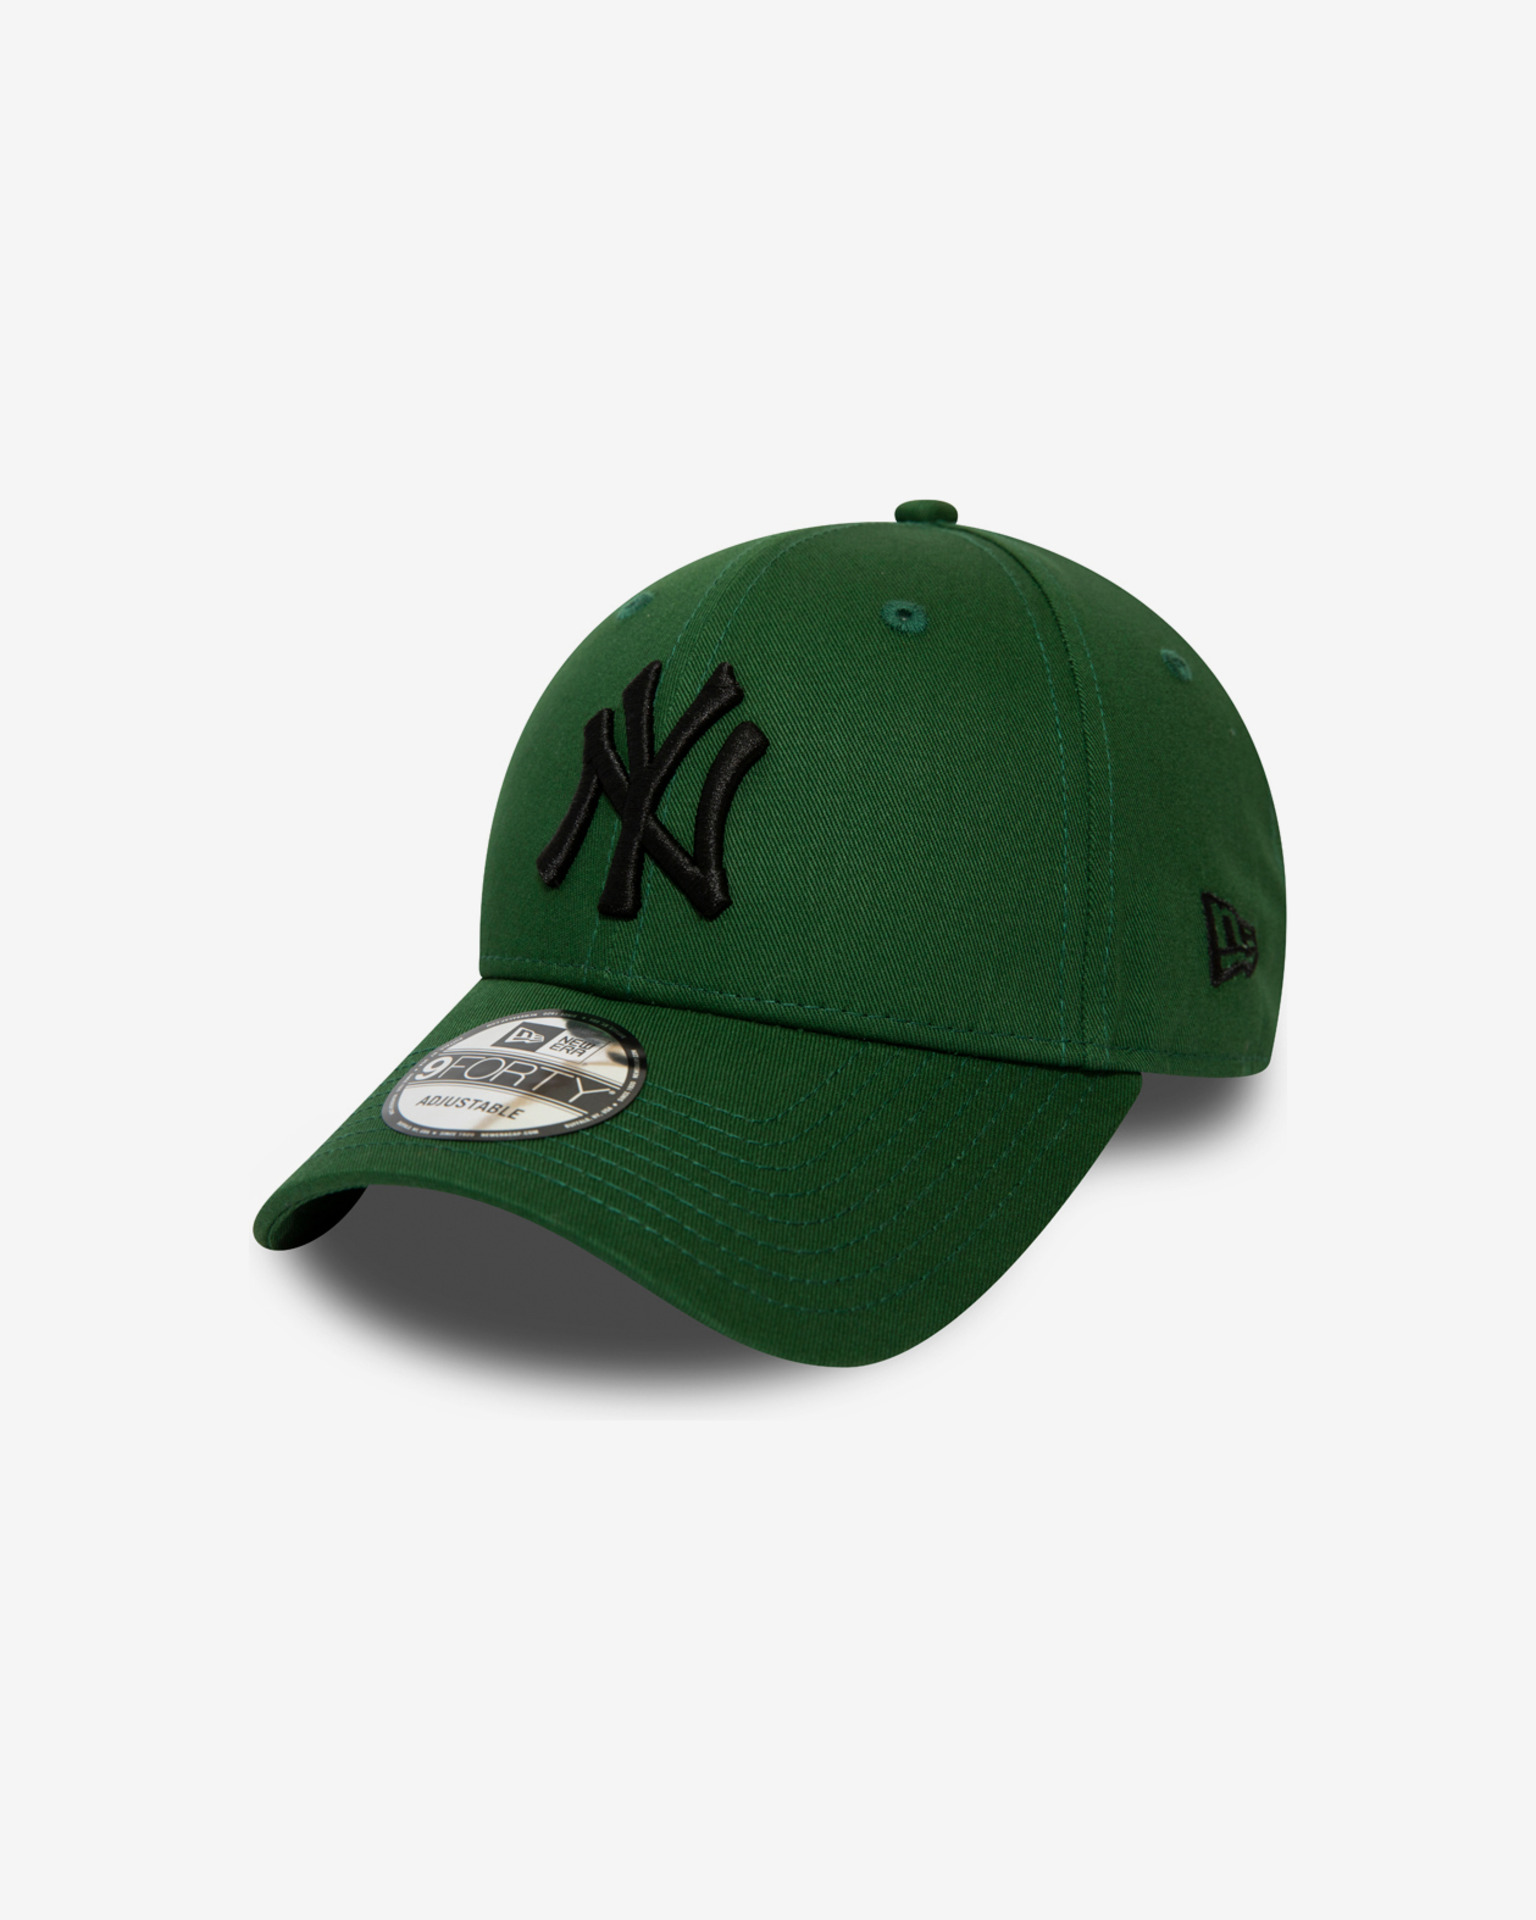 New Era 940 New York Yankees Dark Green Cap